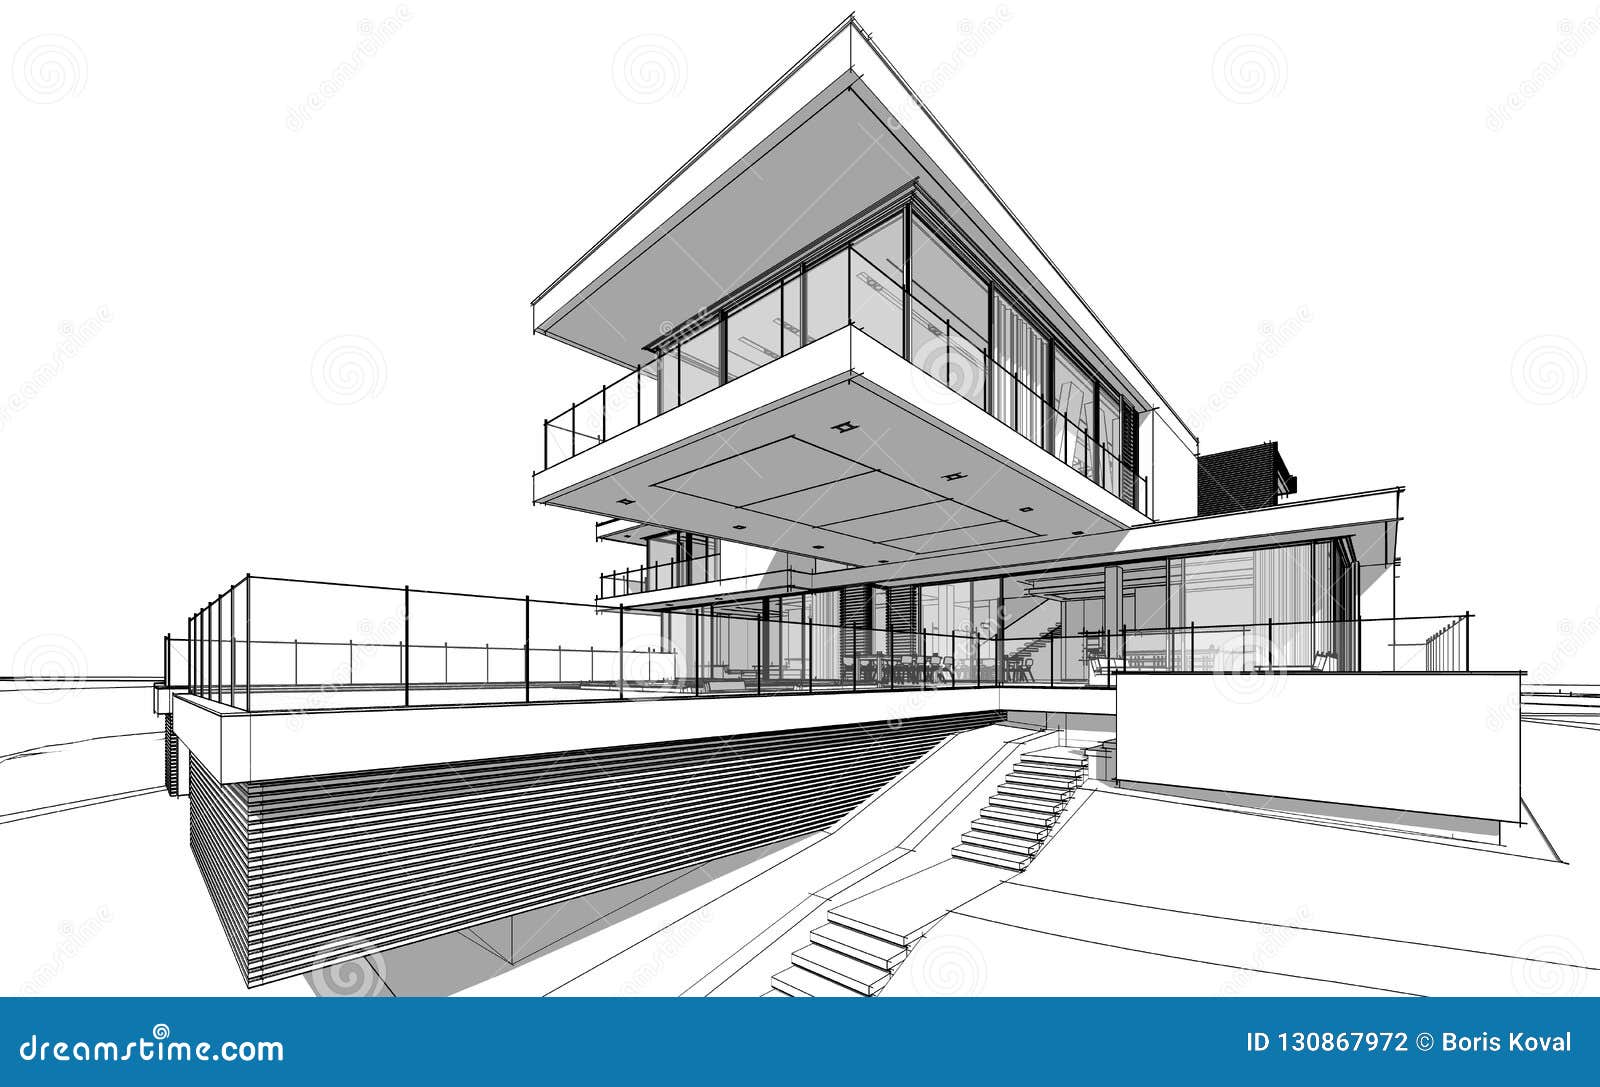 d rendering sketch modern house d rendering sketch modern cozy house river garage sale rent black line 130867972